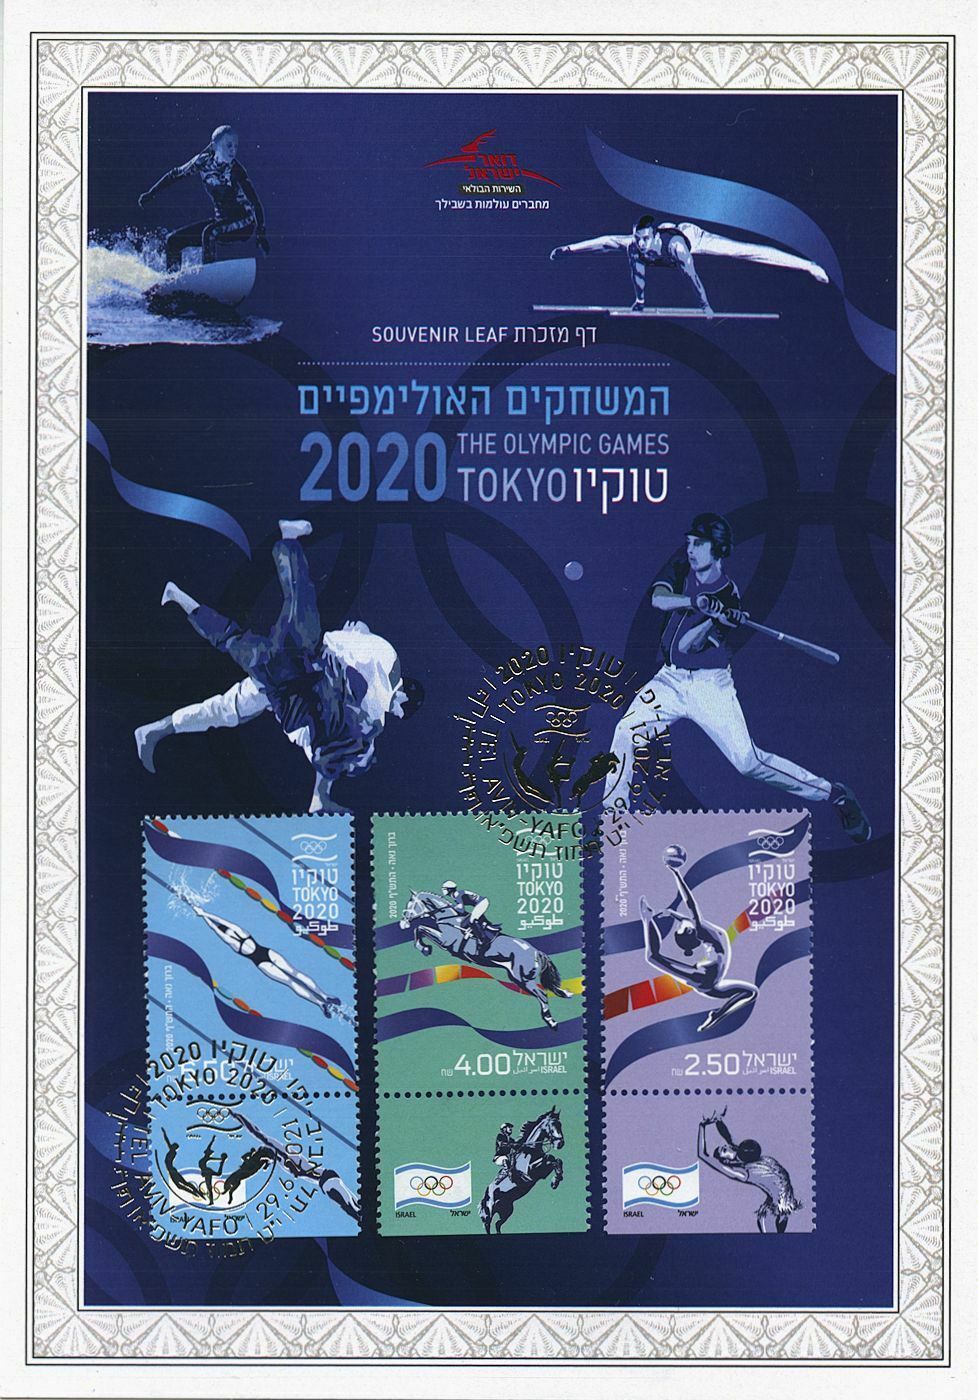 Israel 2021 CTO Olympics Stamps Tokyo 2020 Olympic Games 3v Set Souvenir Leaf